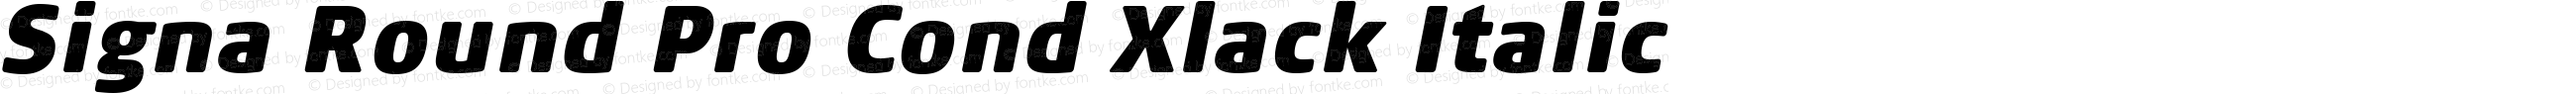 Signa Round Pro Cond Xblack Italic